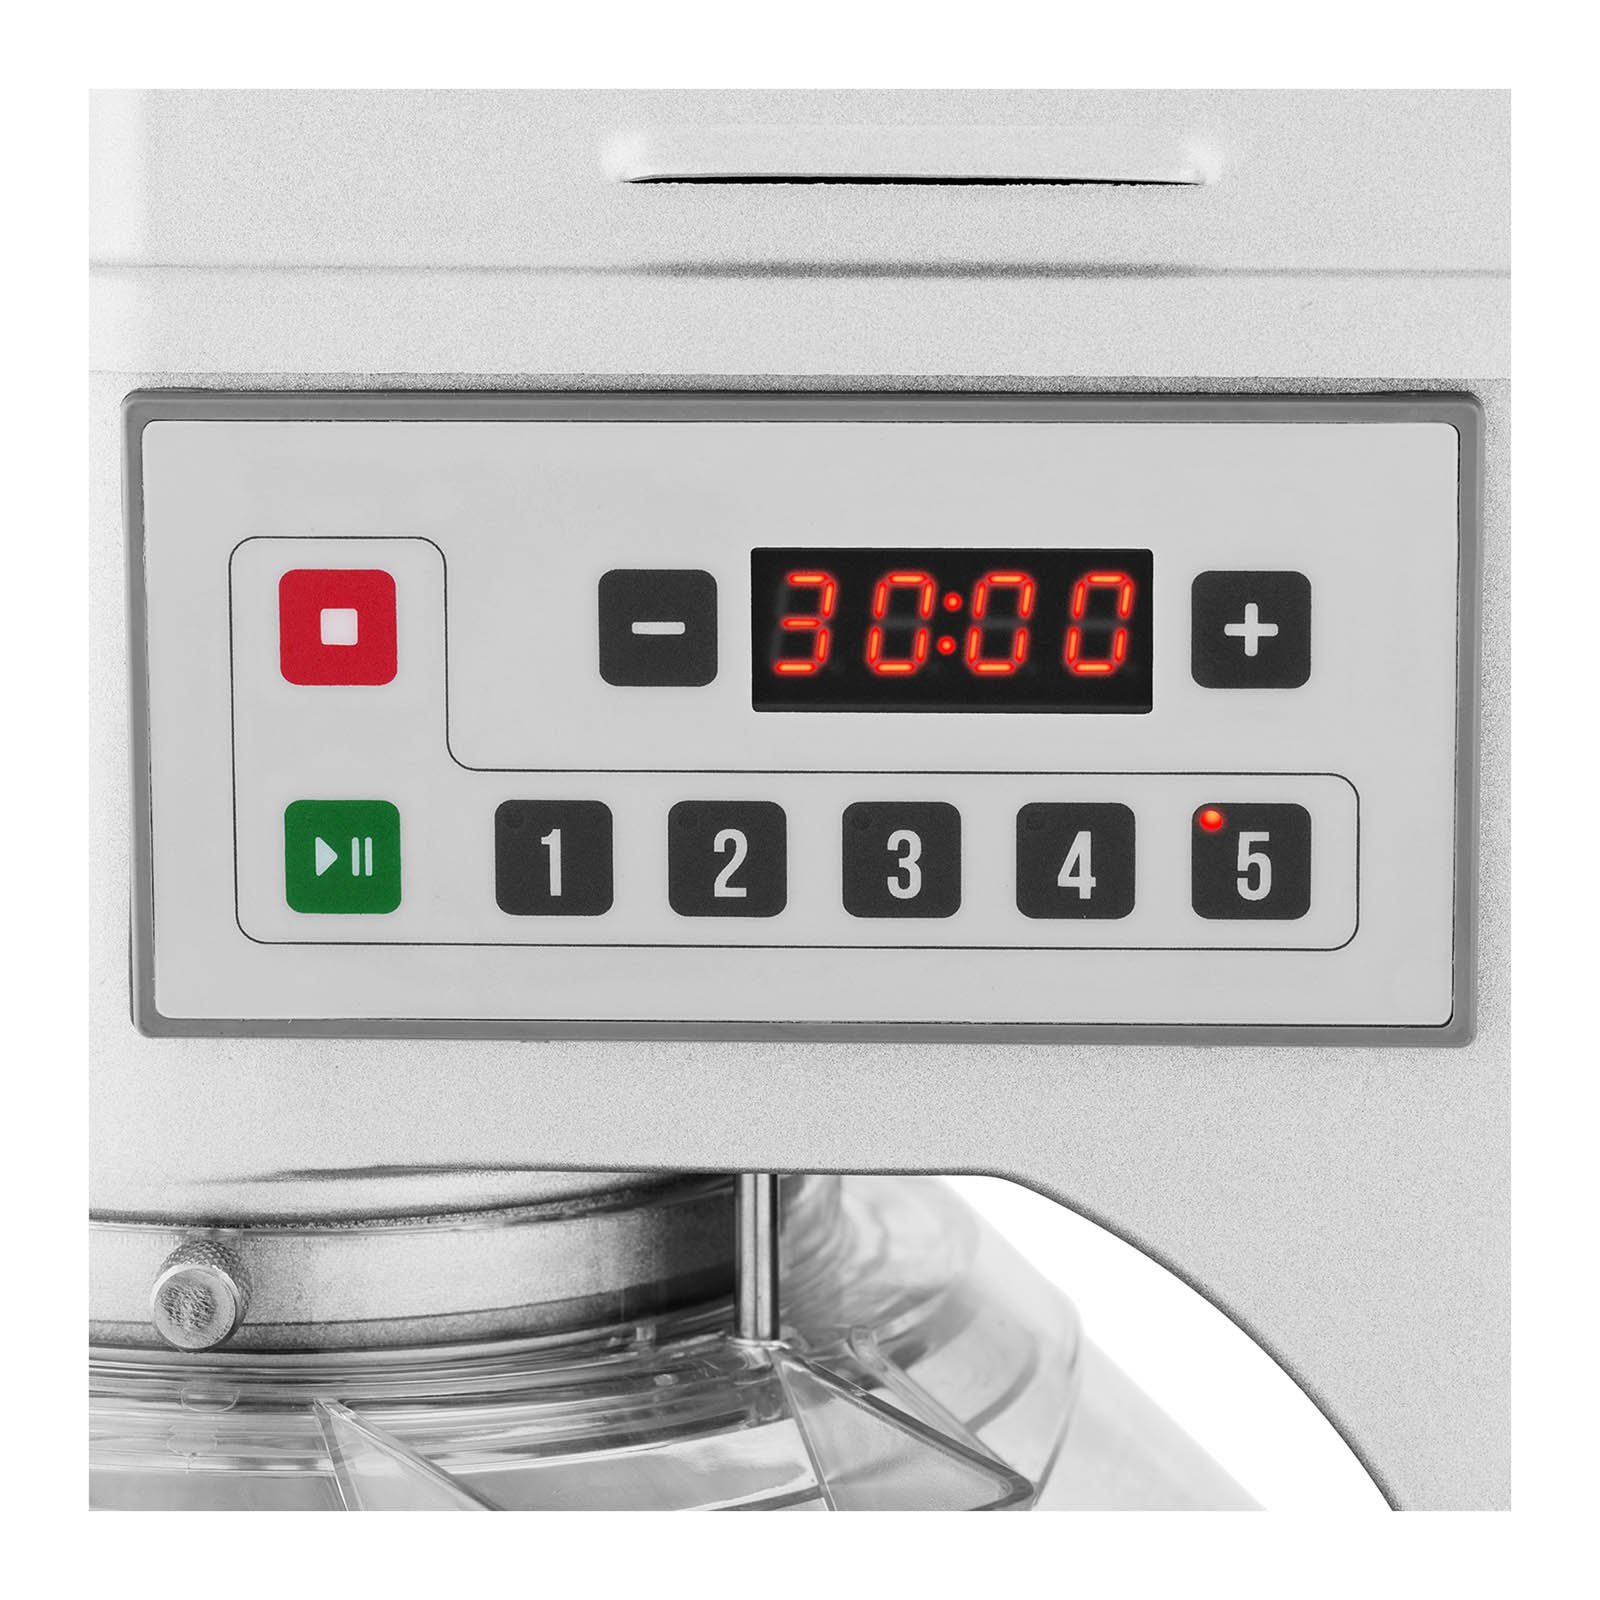 l Küchenmaschine Planetenrührmaschine, Royal 7 Catering Planetenrührwerk Teigknetmaschine W W 650 650